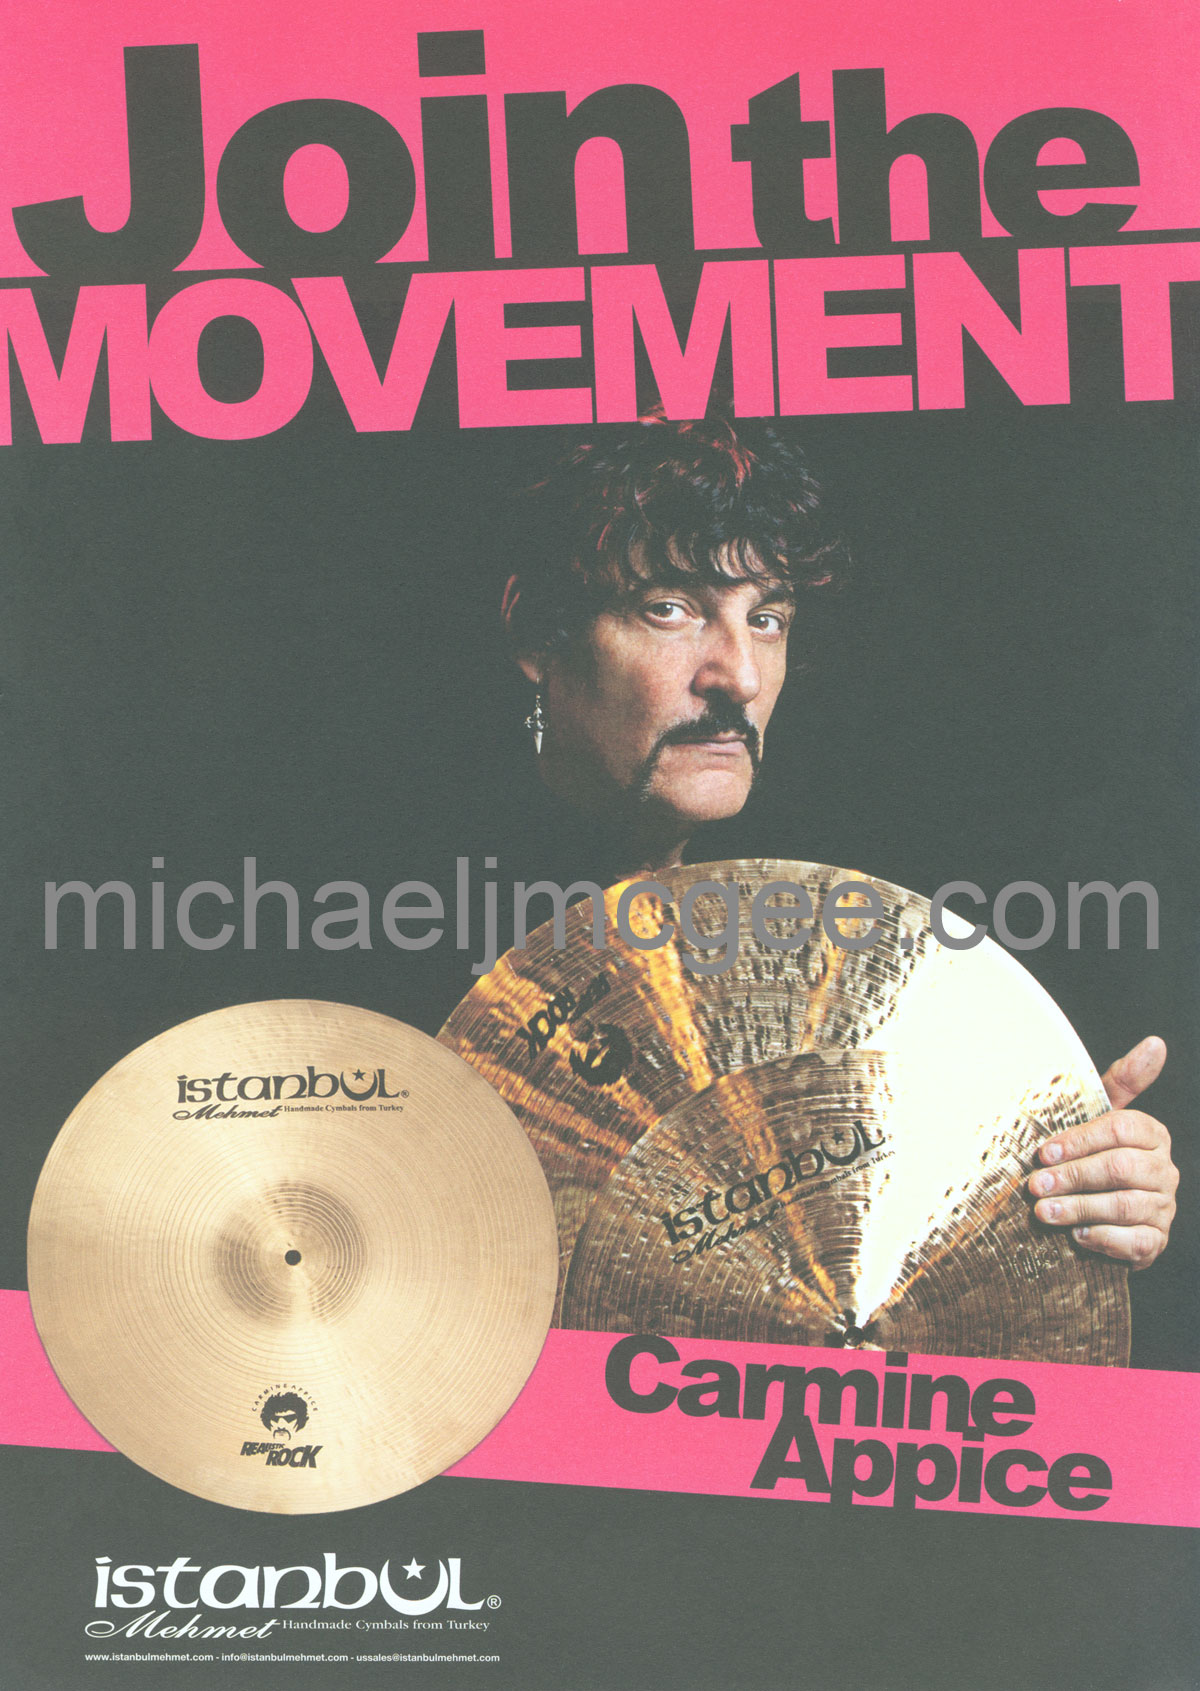 Carmine Appice / michaeljmcgee.com